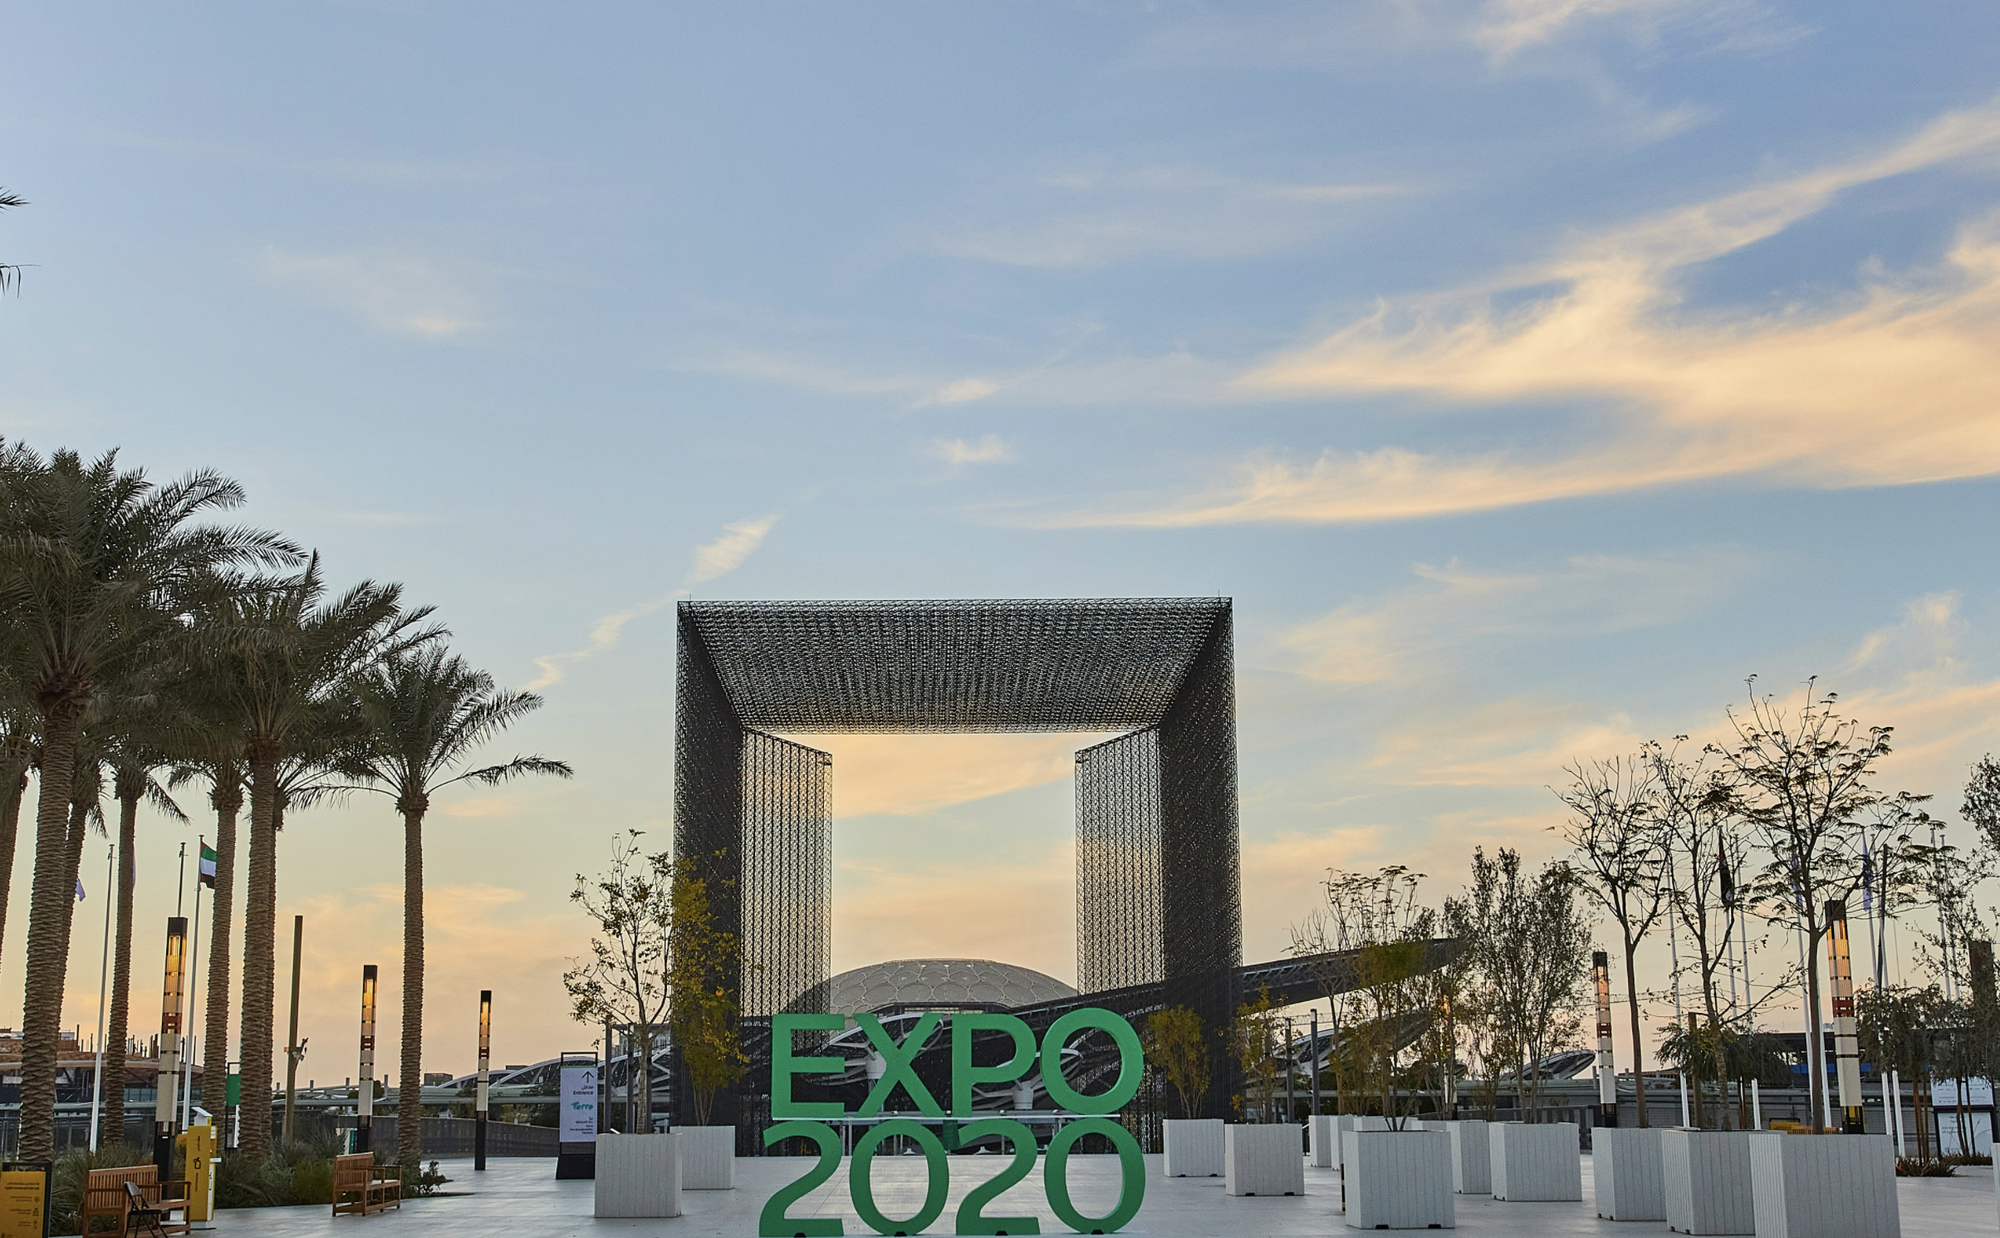 Expo 2020 Dubai countdown begins! ⏳